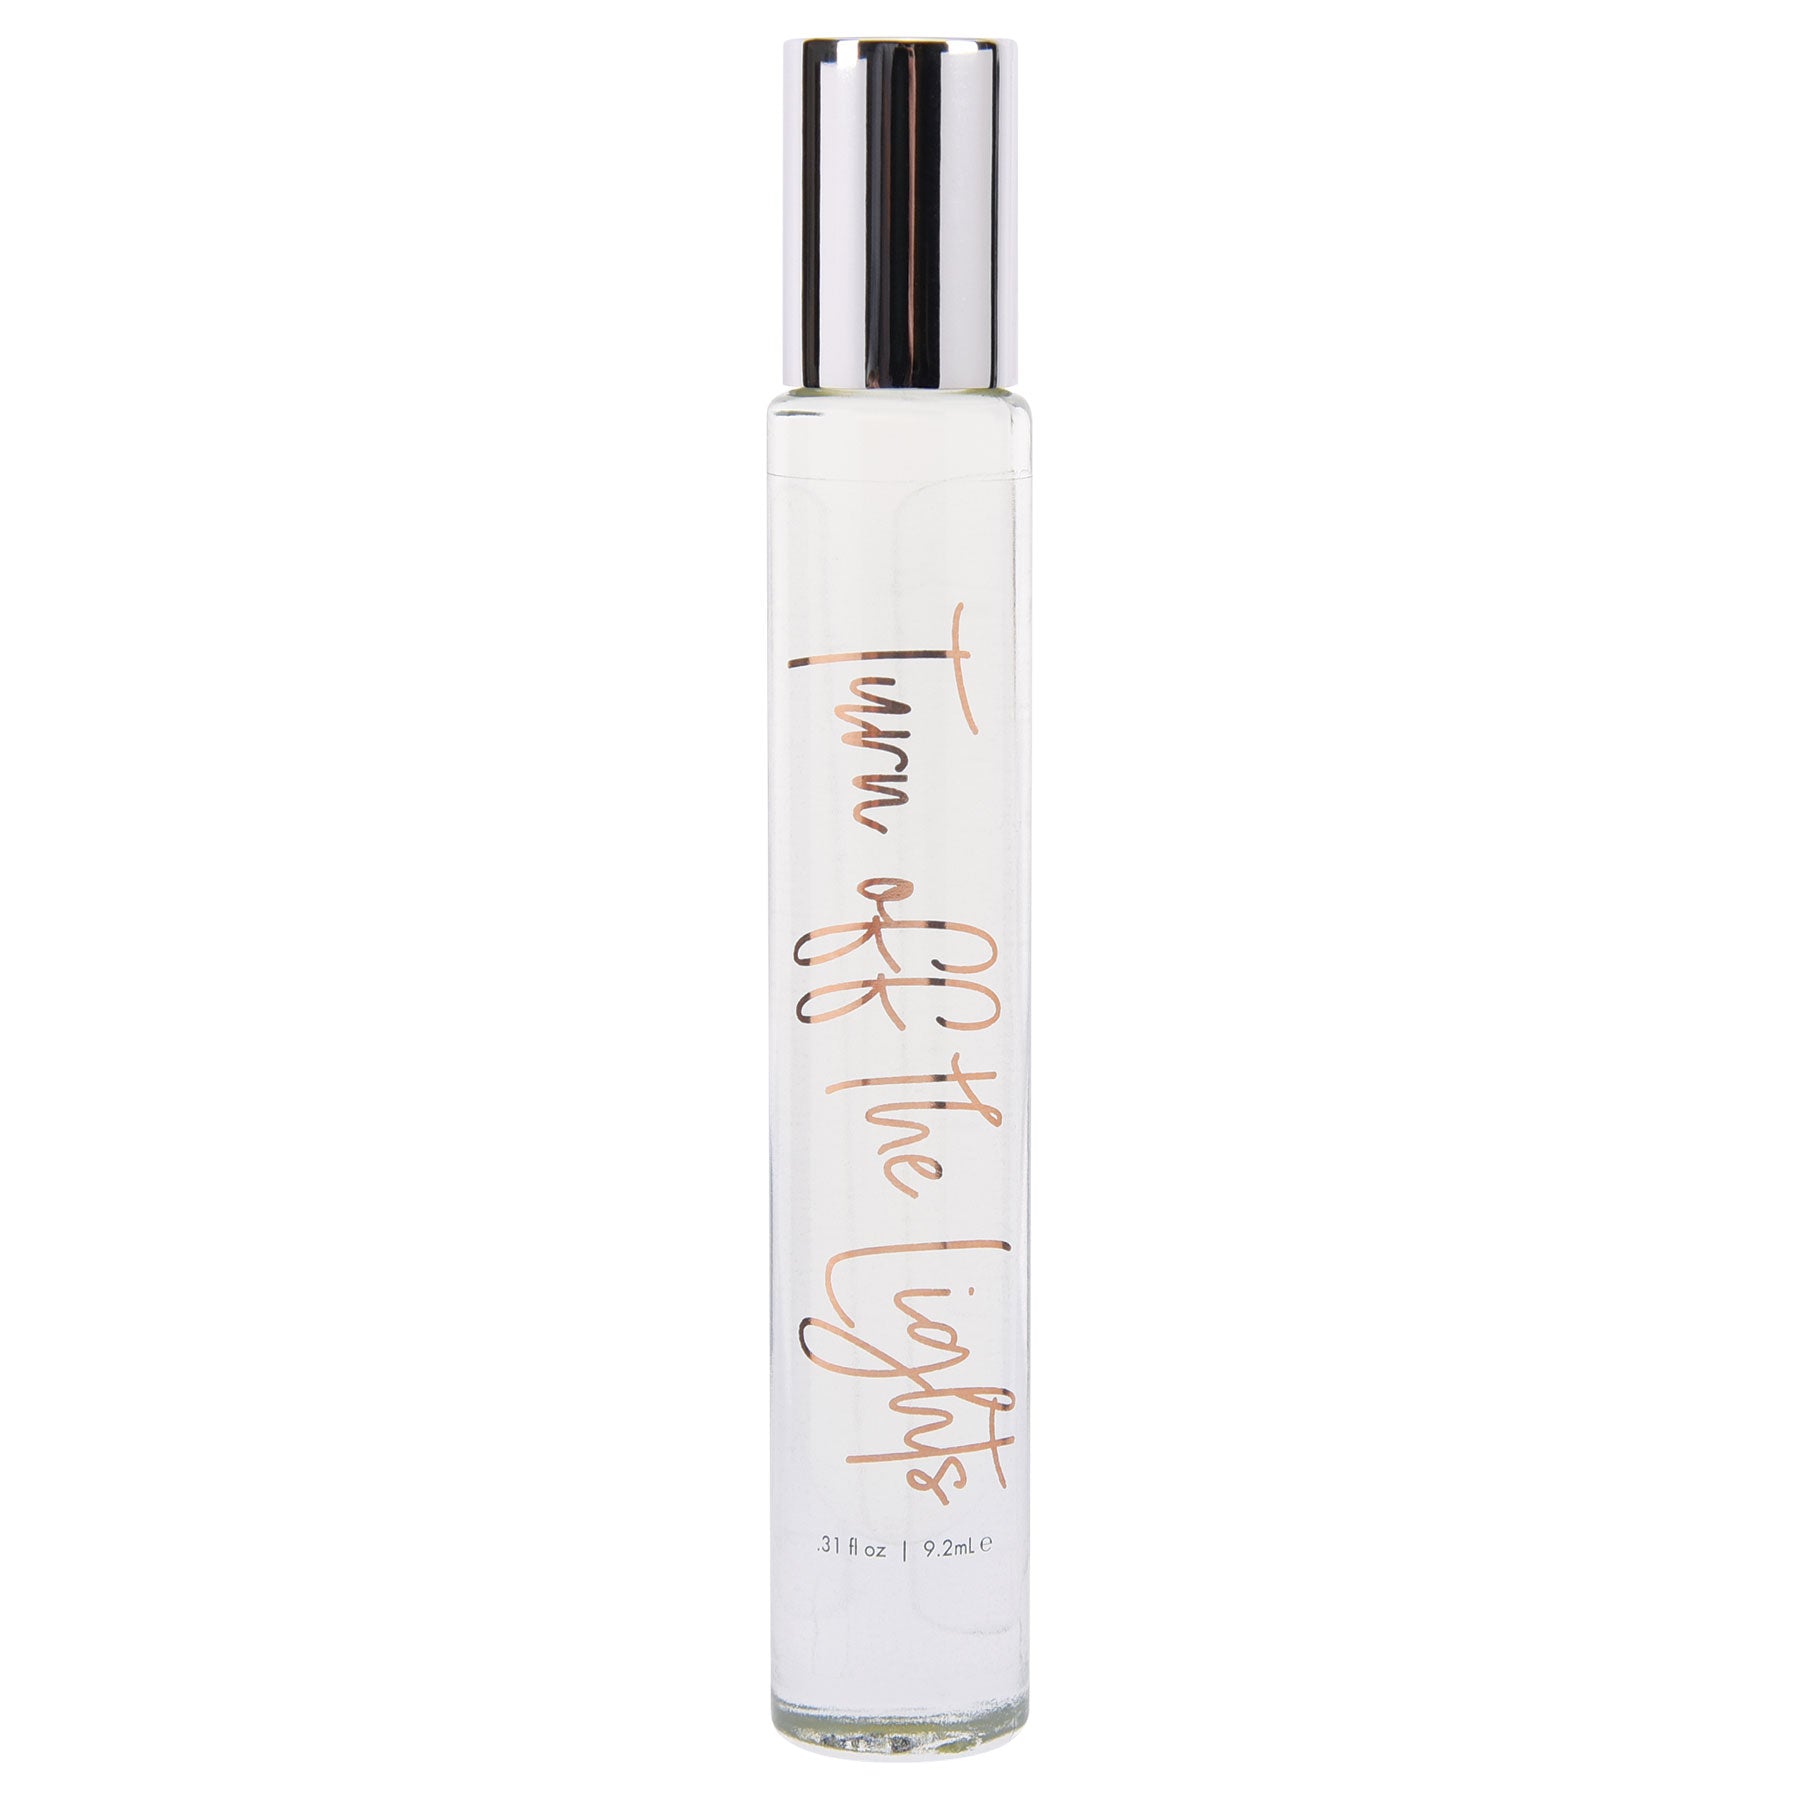 Turn Off the Lights- Pheromone Perfume Oil - 9.2 ml CGC1102-00